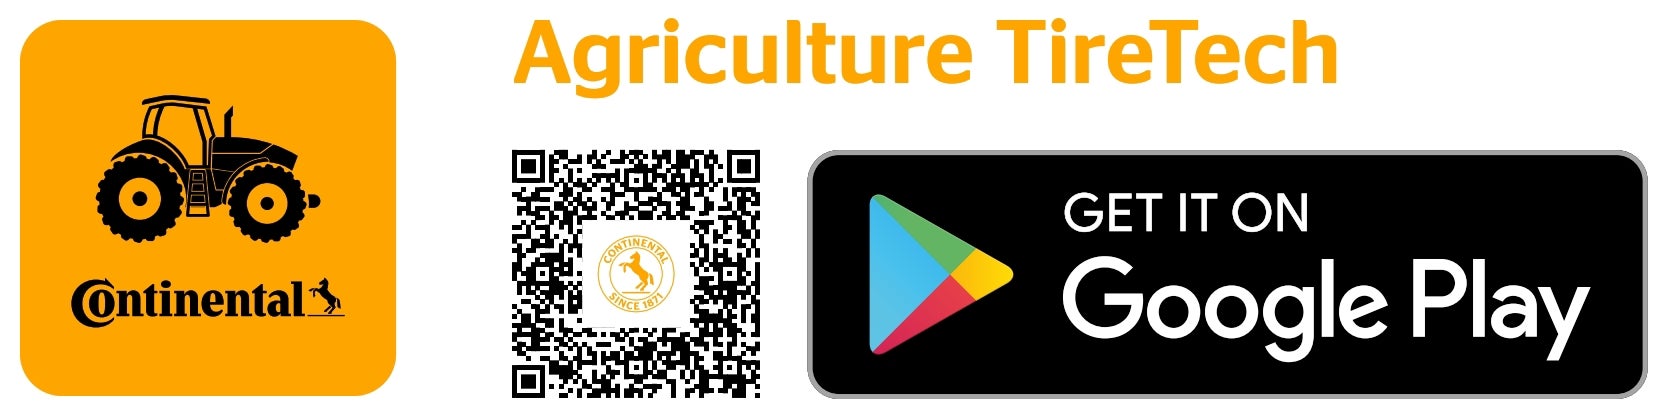 Agriculture TireTech  Google Play App